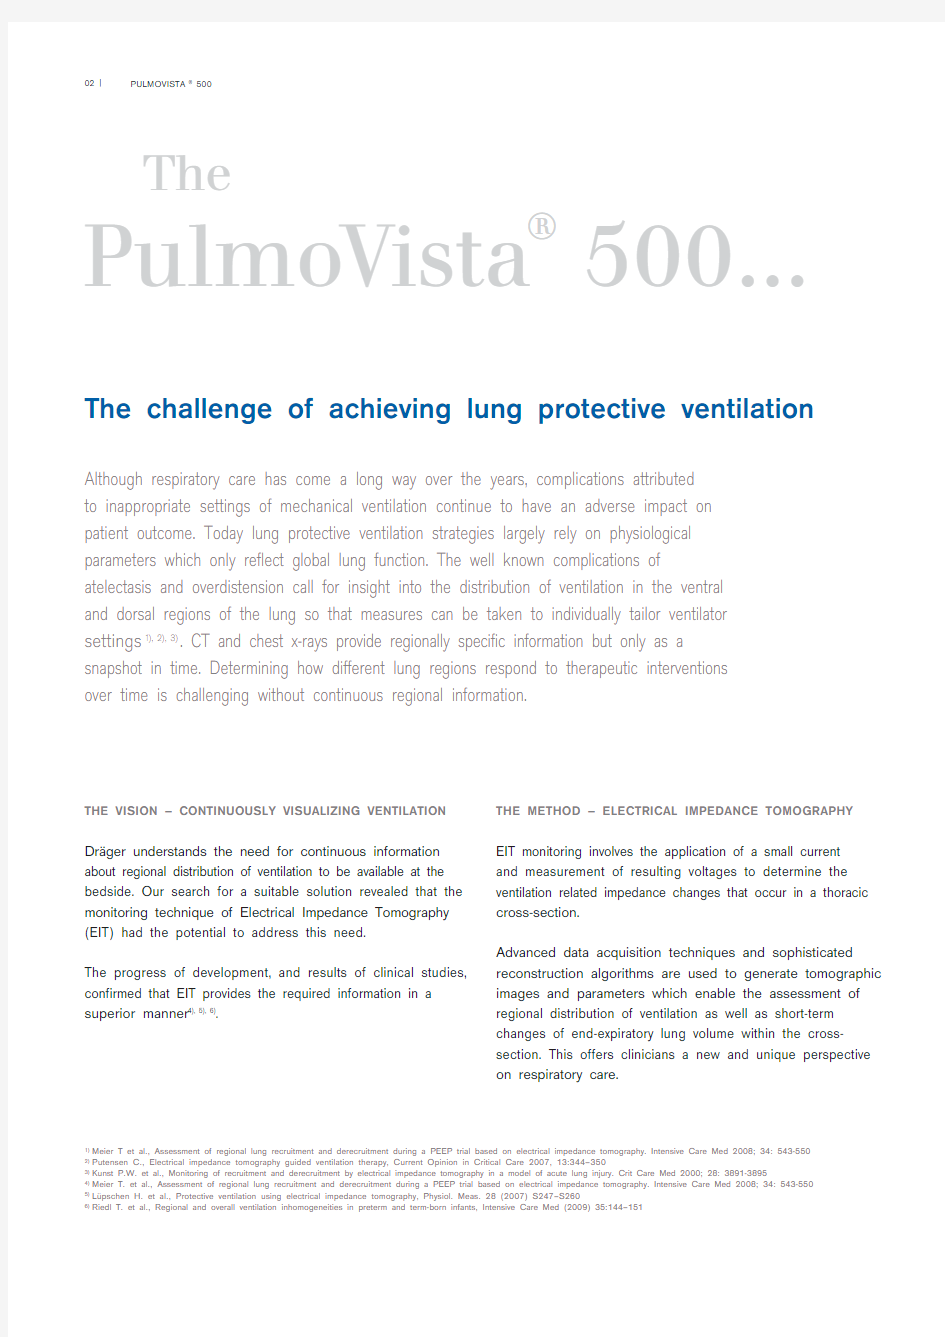 rsp_pulmovista_500_making_ventilation_visible_9066478_en